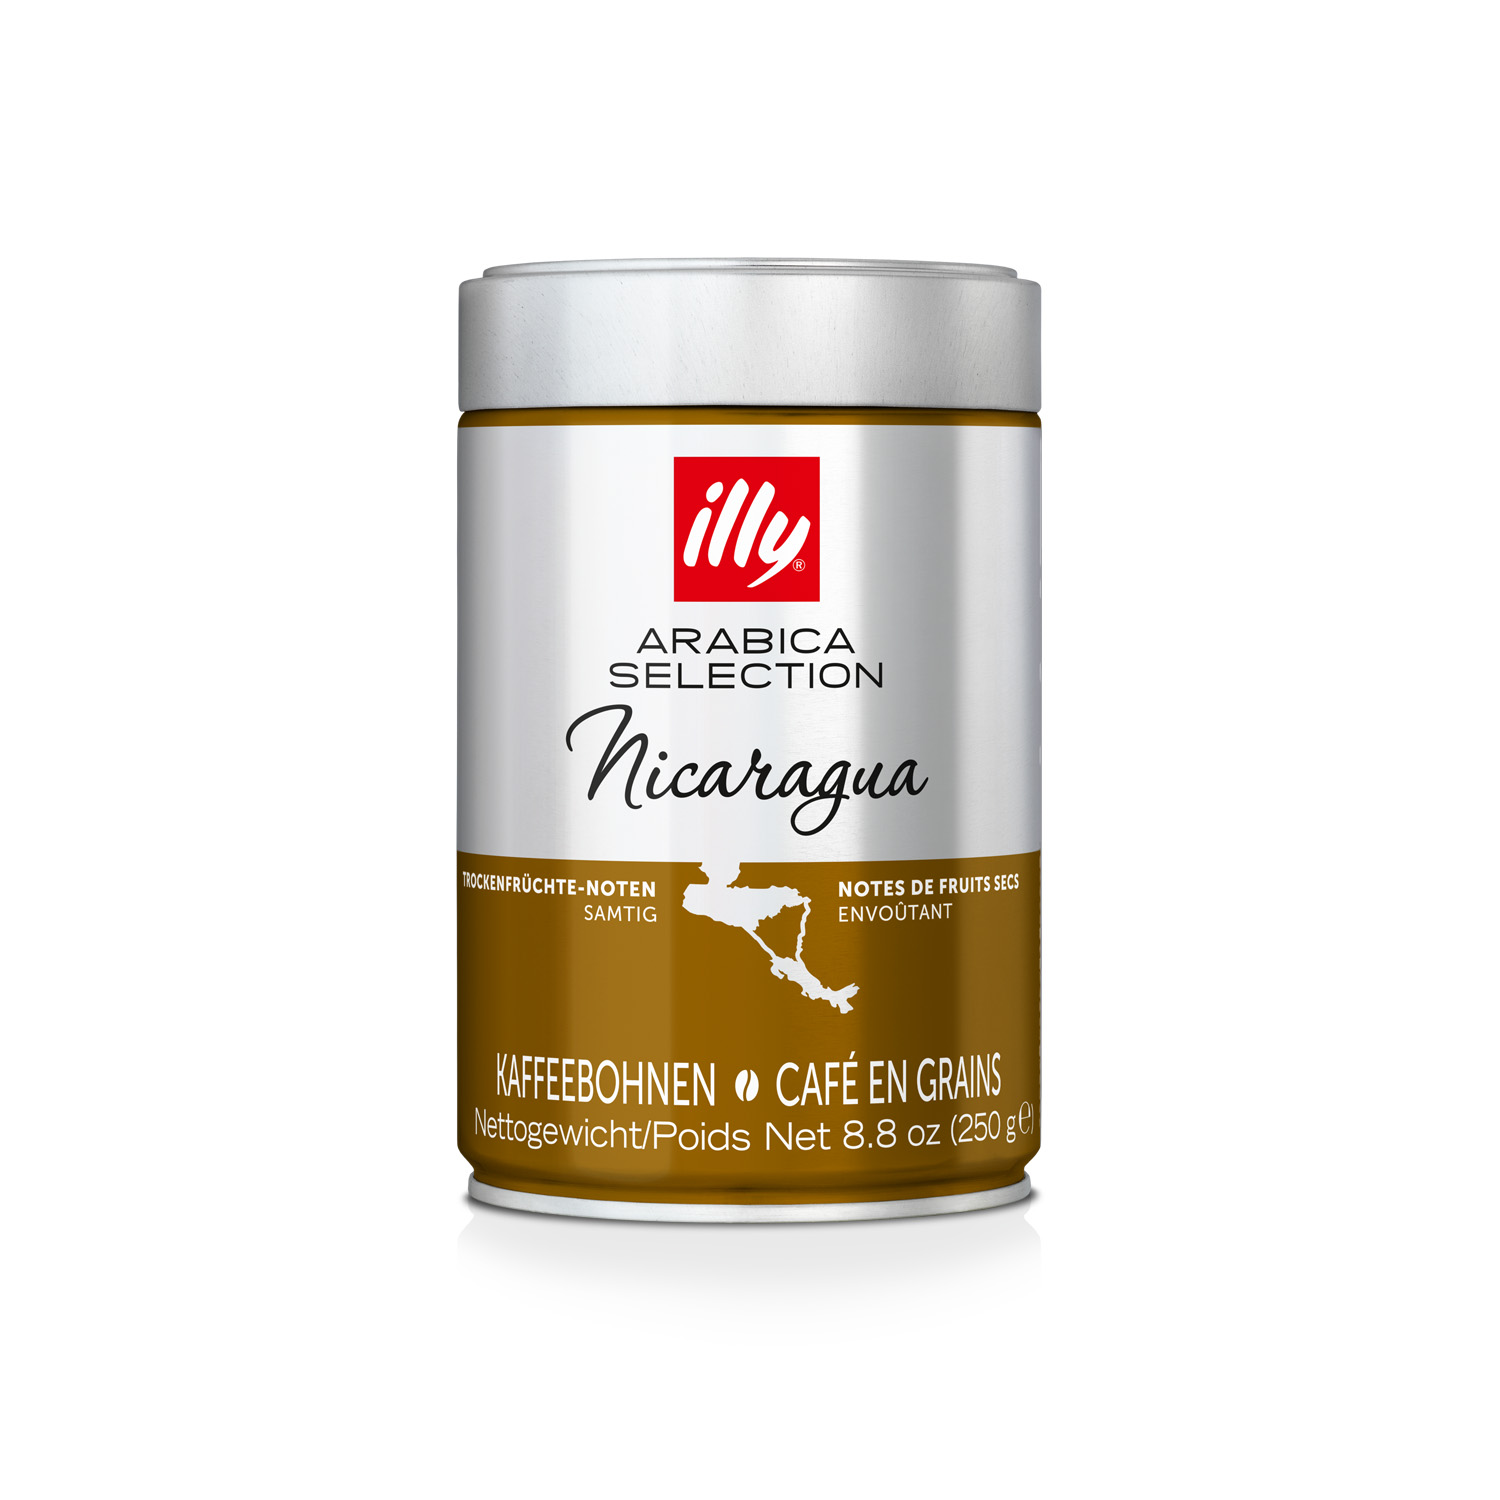 Espressobohnen der Arabica Selection aus Nicaragua